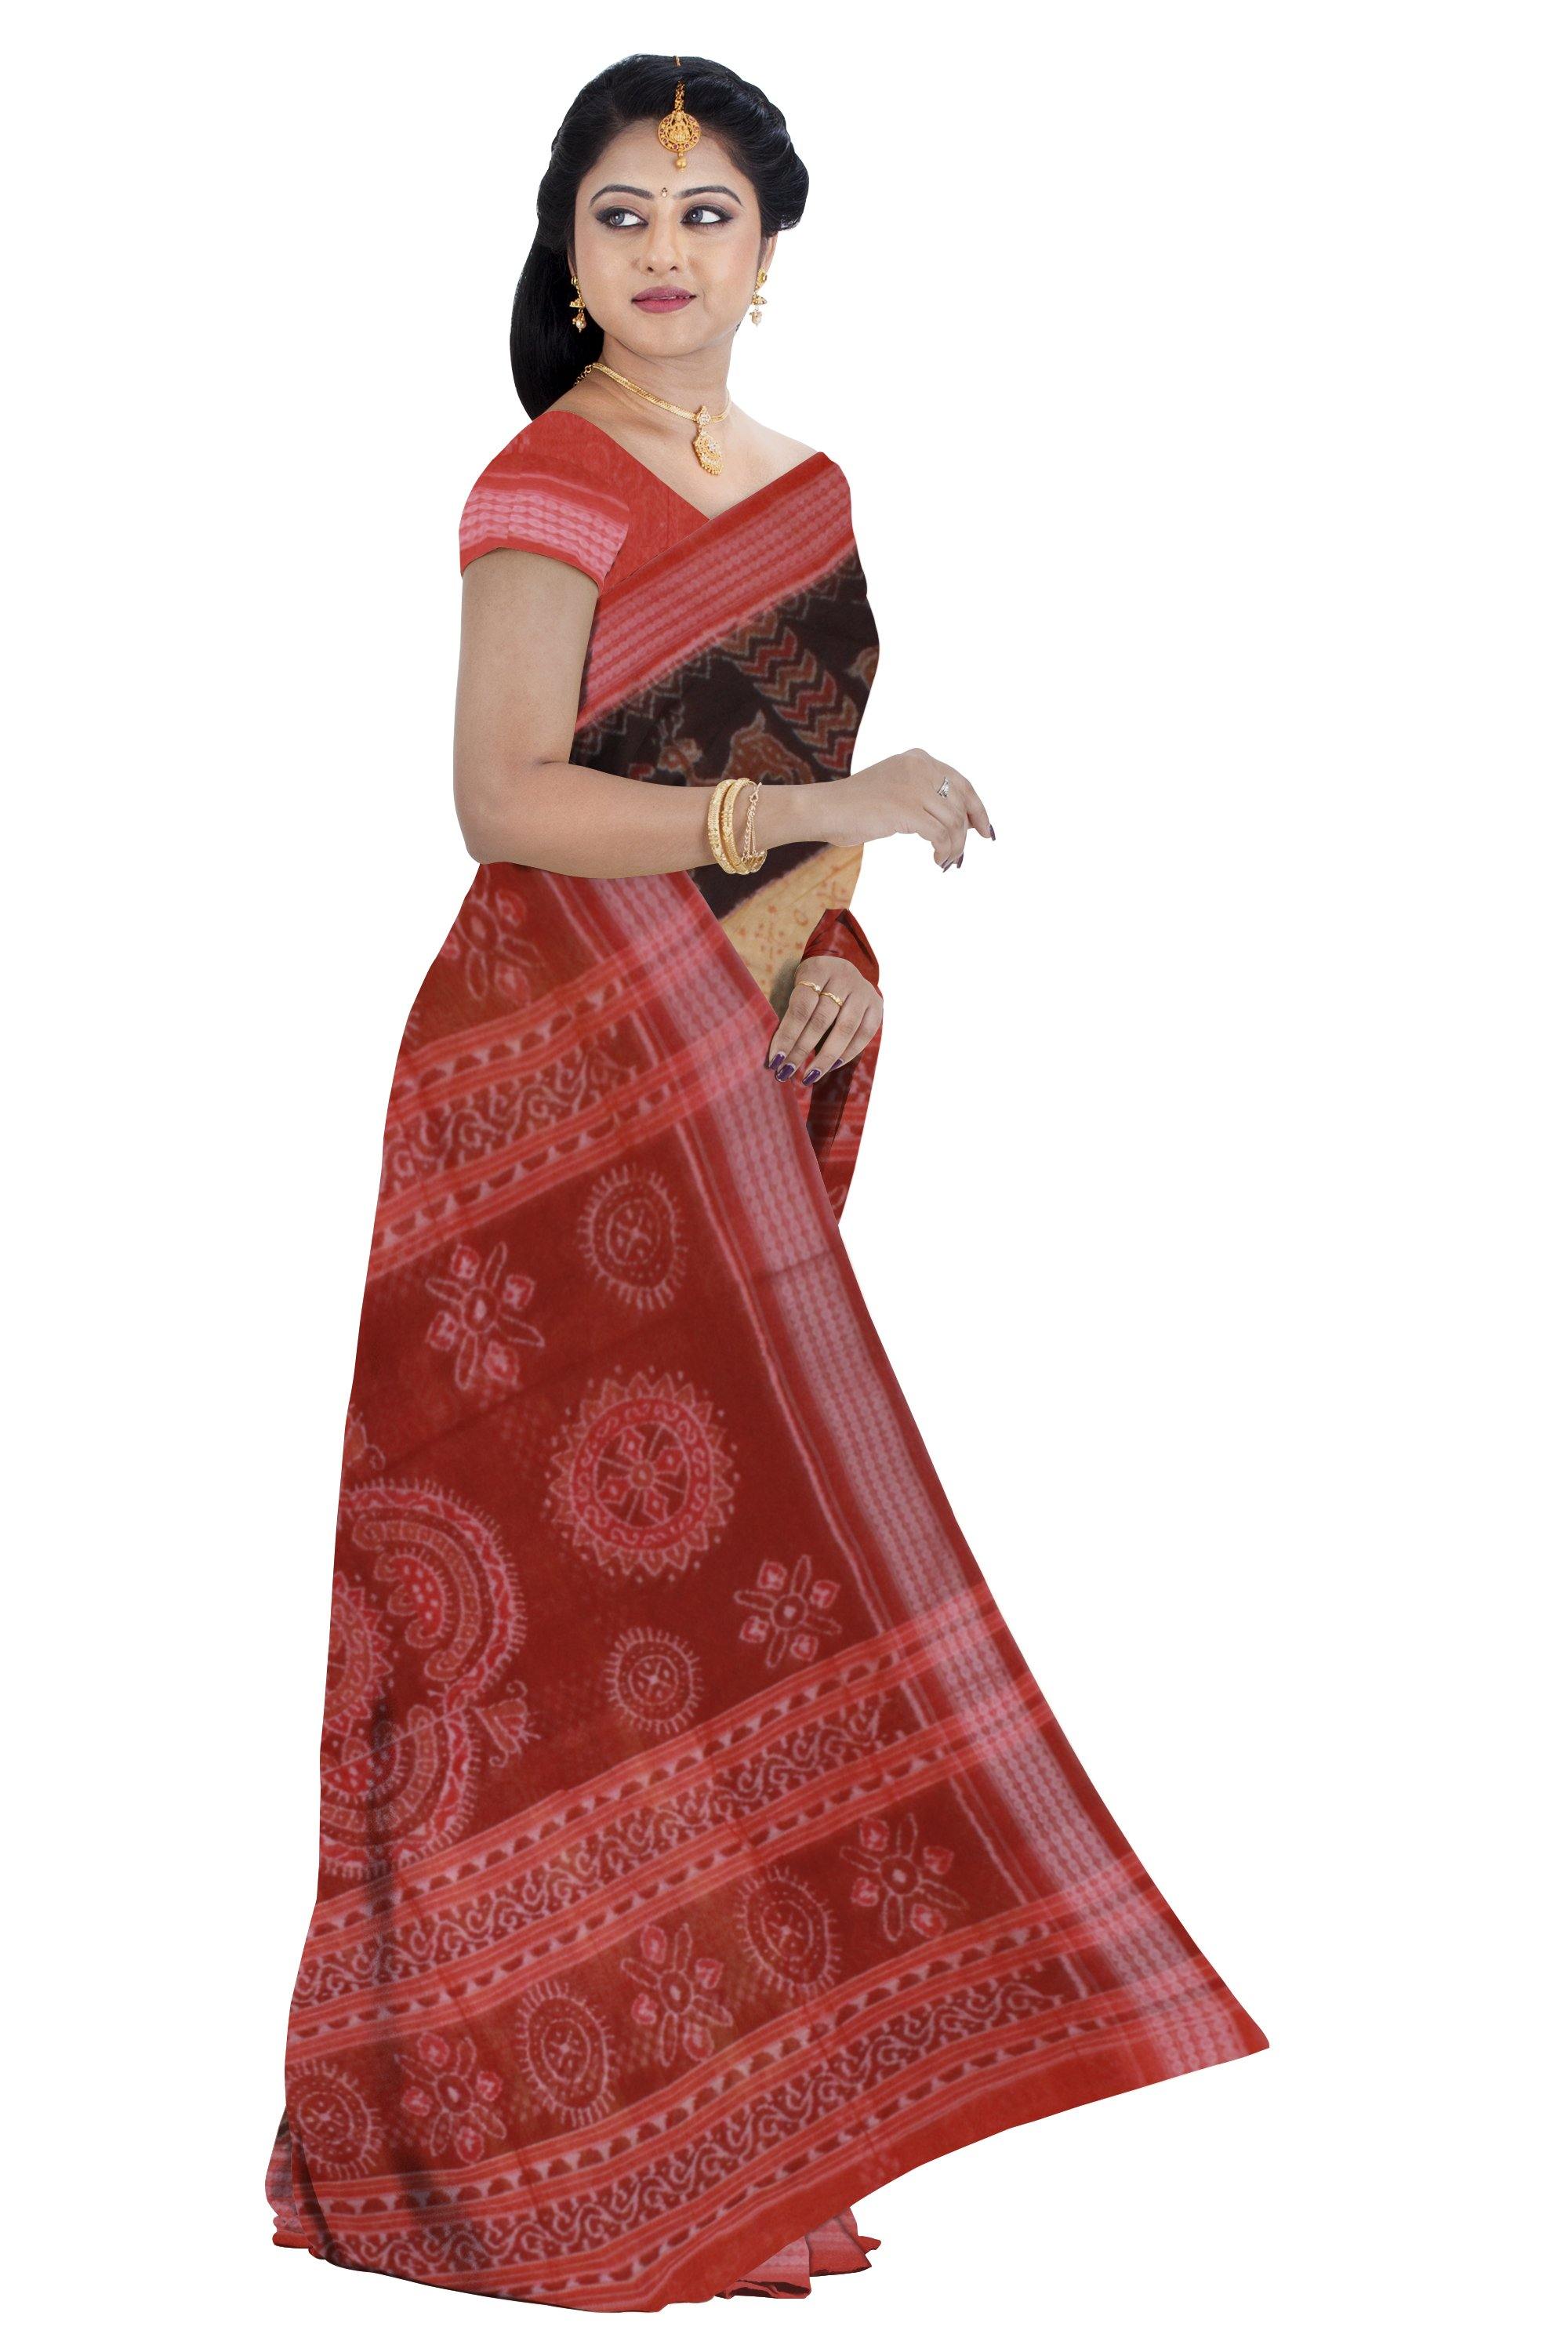 Kalash pattern  Cotton Saree in Black & light Orange Colour - Koshali Arts & Crafts Enterprise